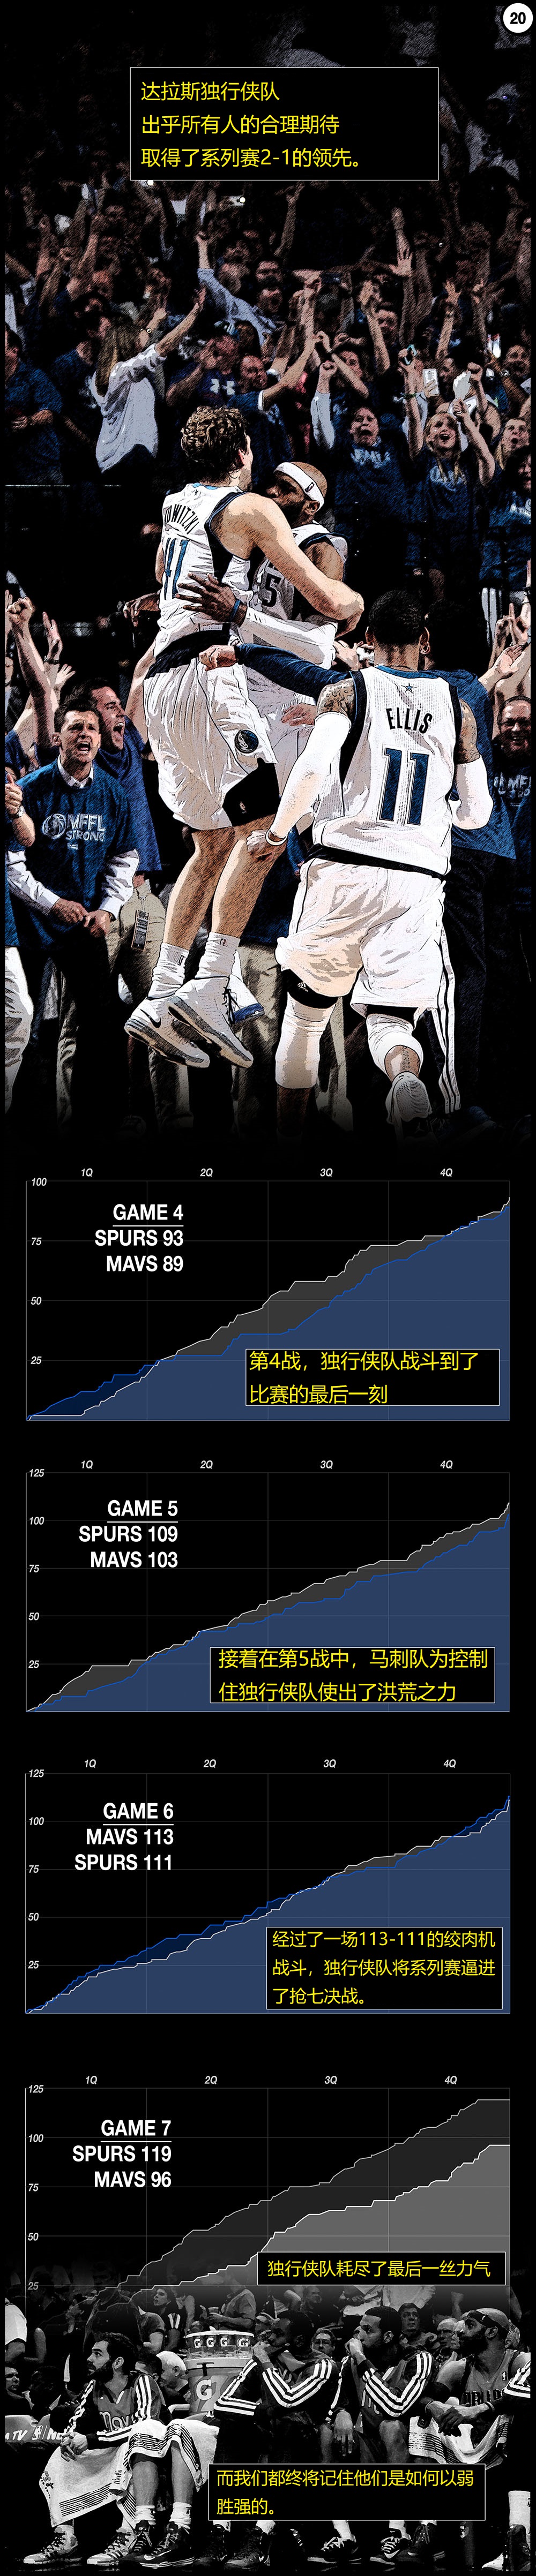 2013NBA季后赛对阵图(22图说14年季后赛独行侠队vs马刺队，看NBA史上最伟大的执教表演)